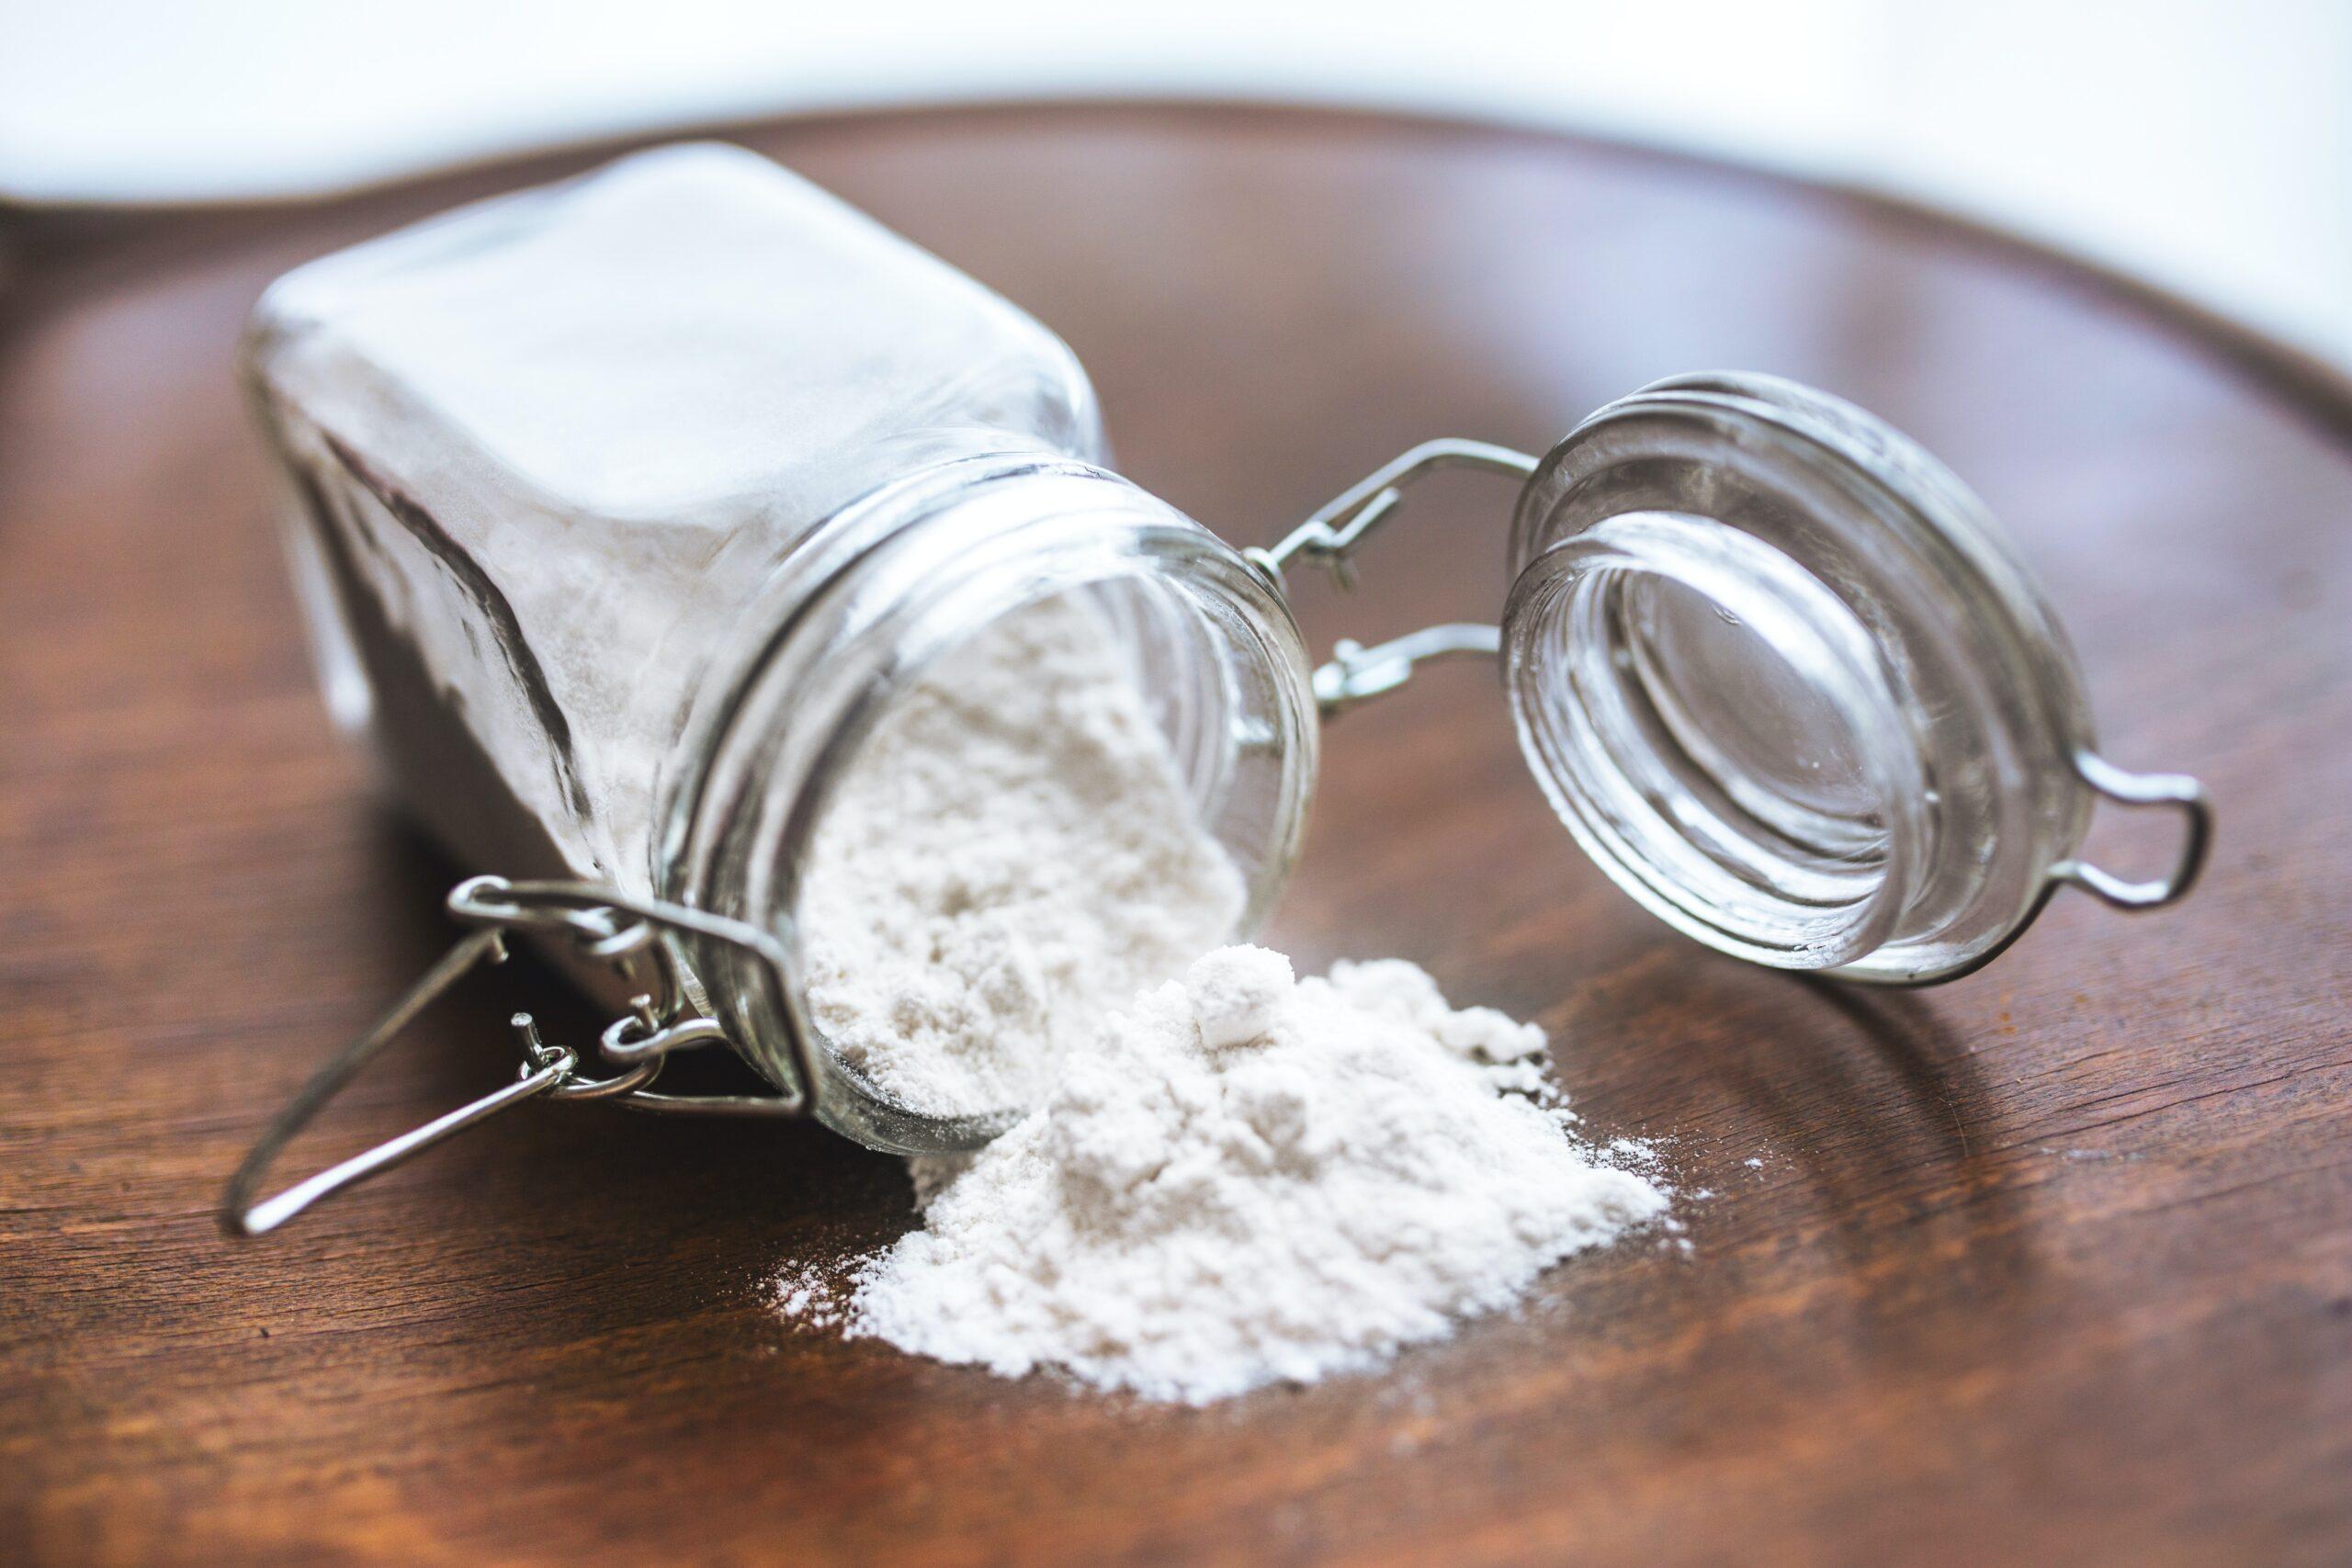 Does Baking Soda To Pass Drug Test Work? Dangers & Detox